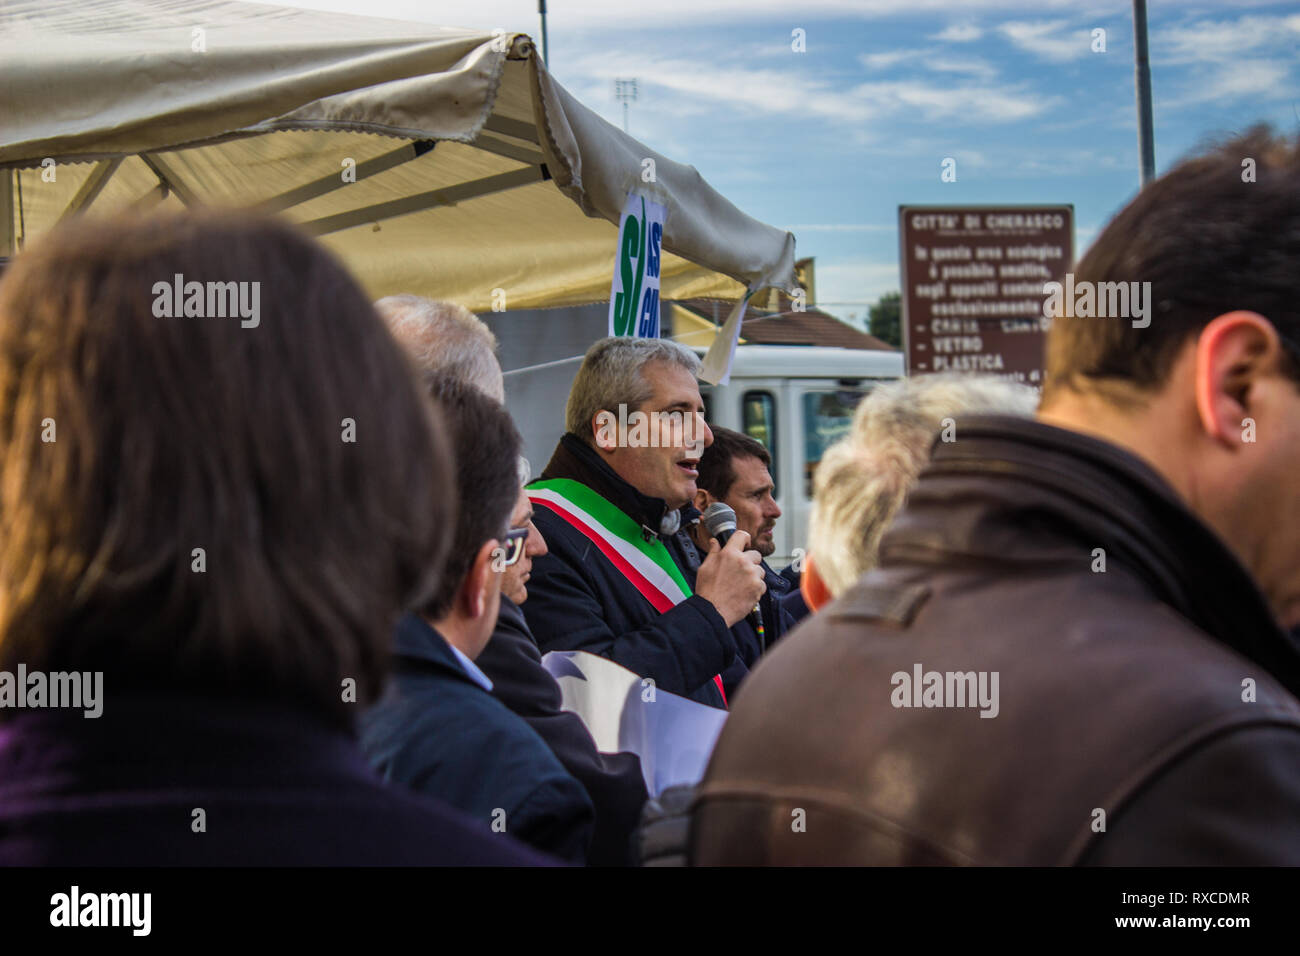 Roreto di Cherasco, Cuneo / Italy 02-26-2019: Protest of mayors for the Asti-Cuneo motorway. Stock Photo